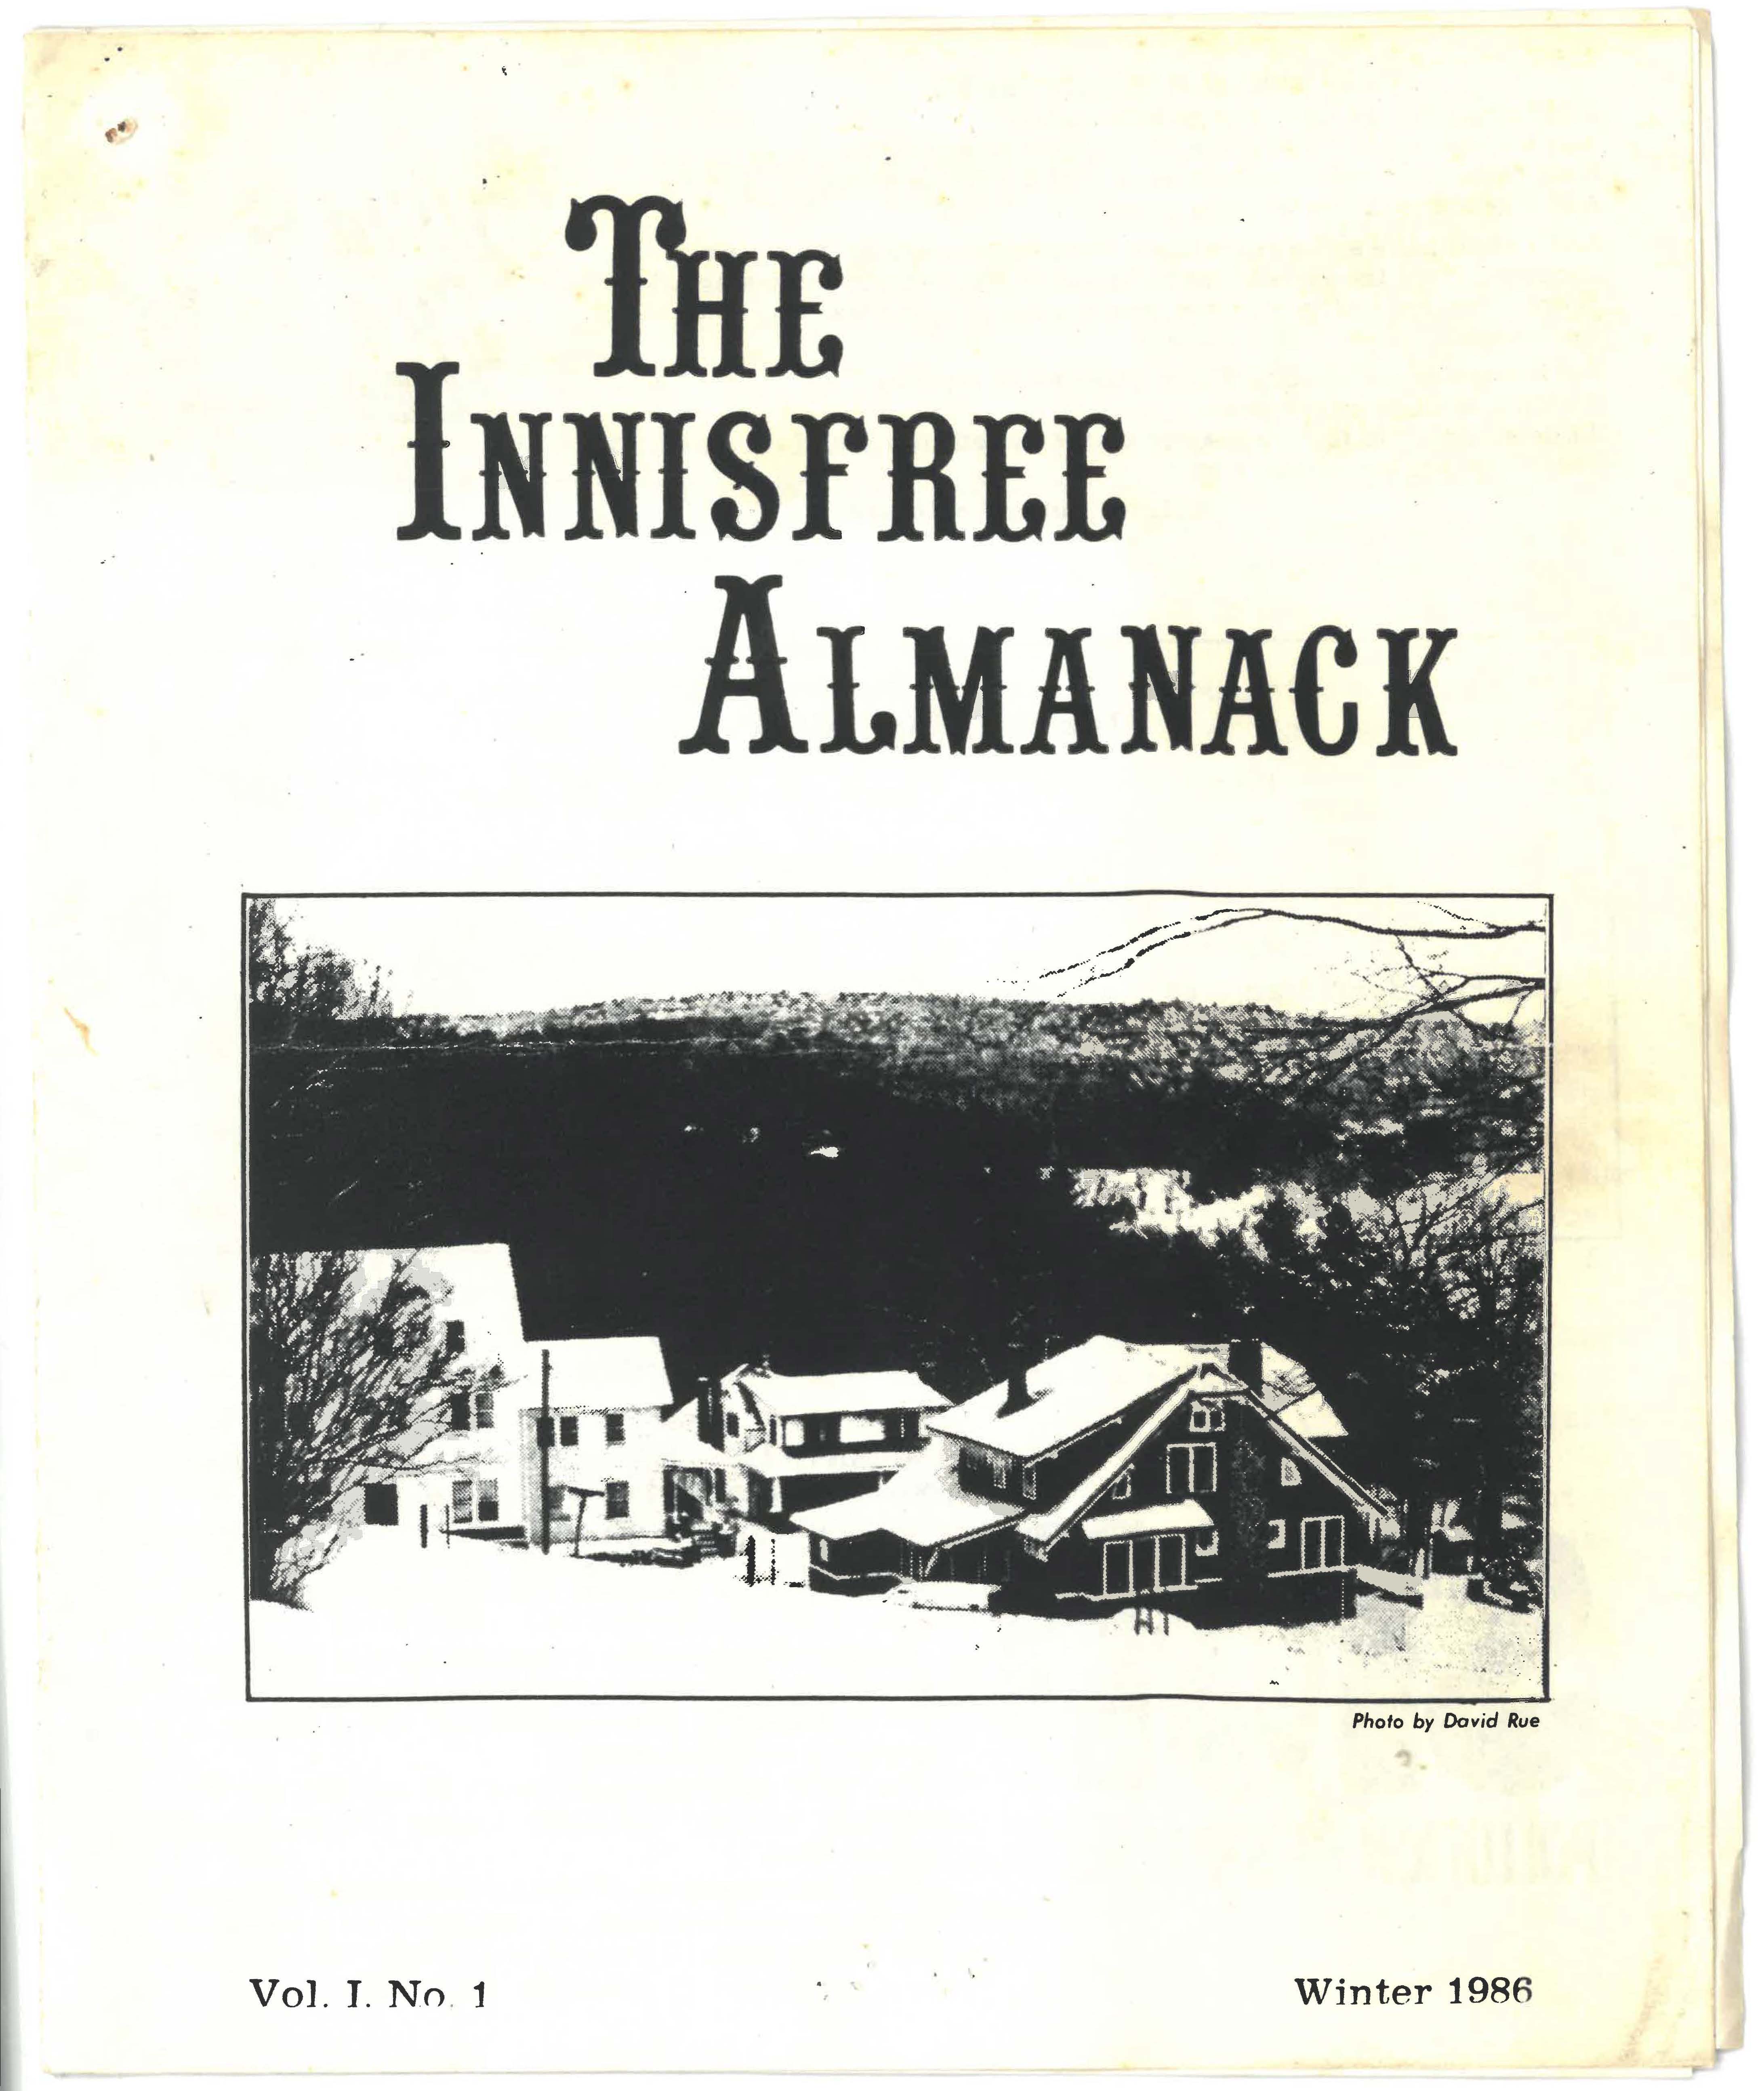 The Innisfree Almanack, Vol. 1, No. 1, Winter 1986